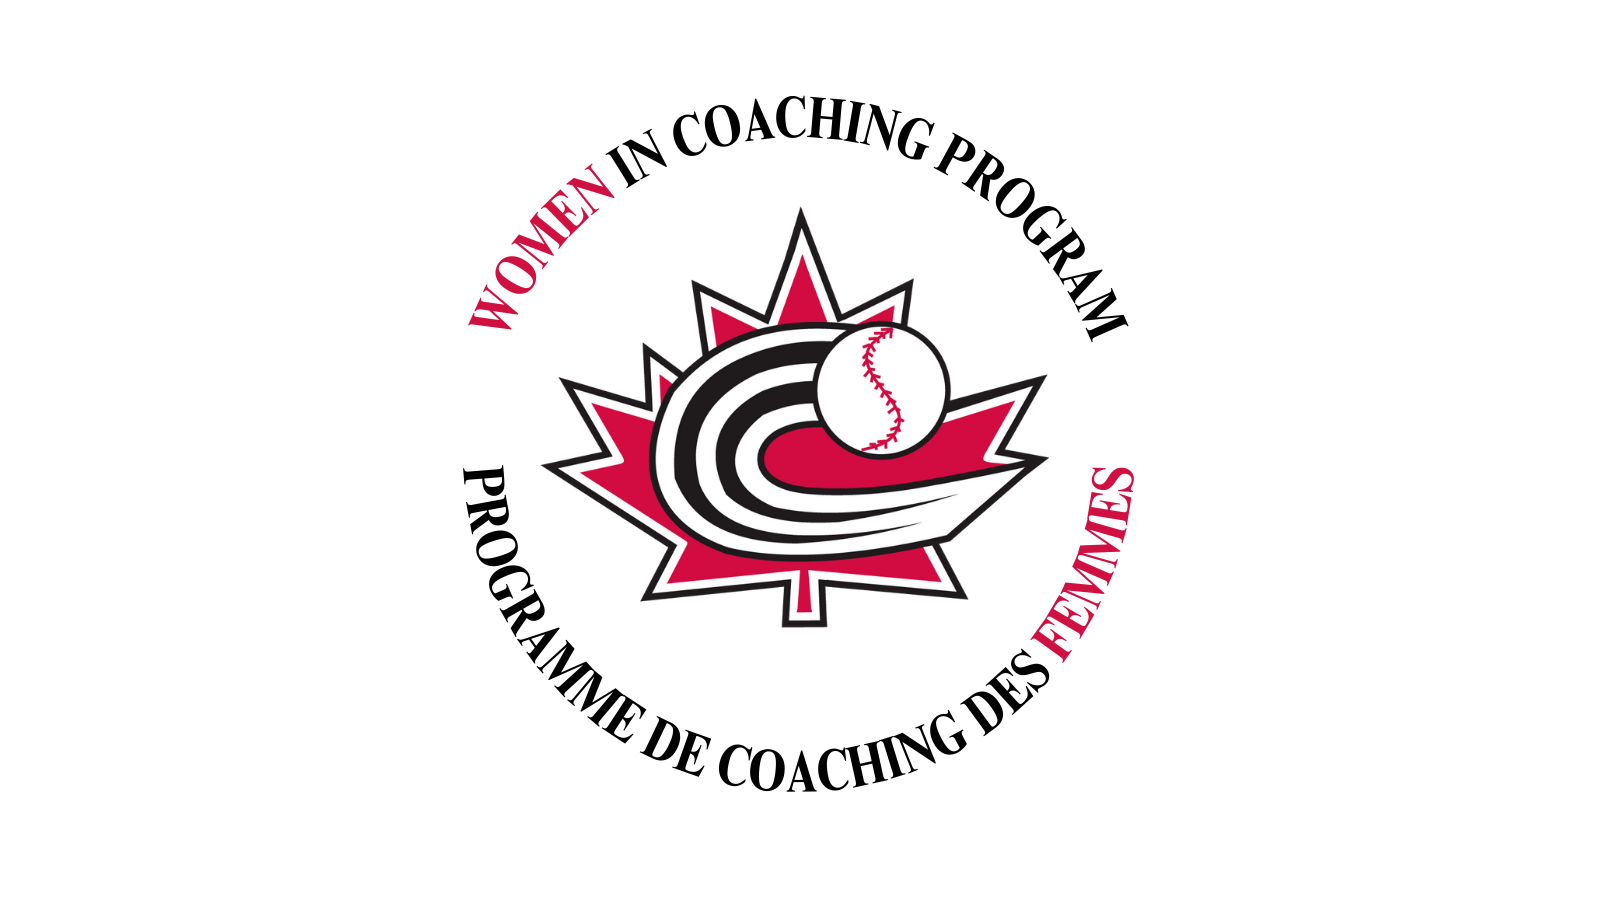 Baseball Canada announces new Women in Coaching Program